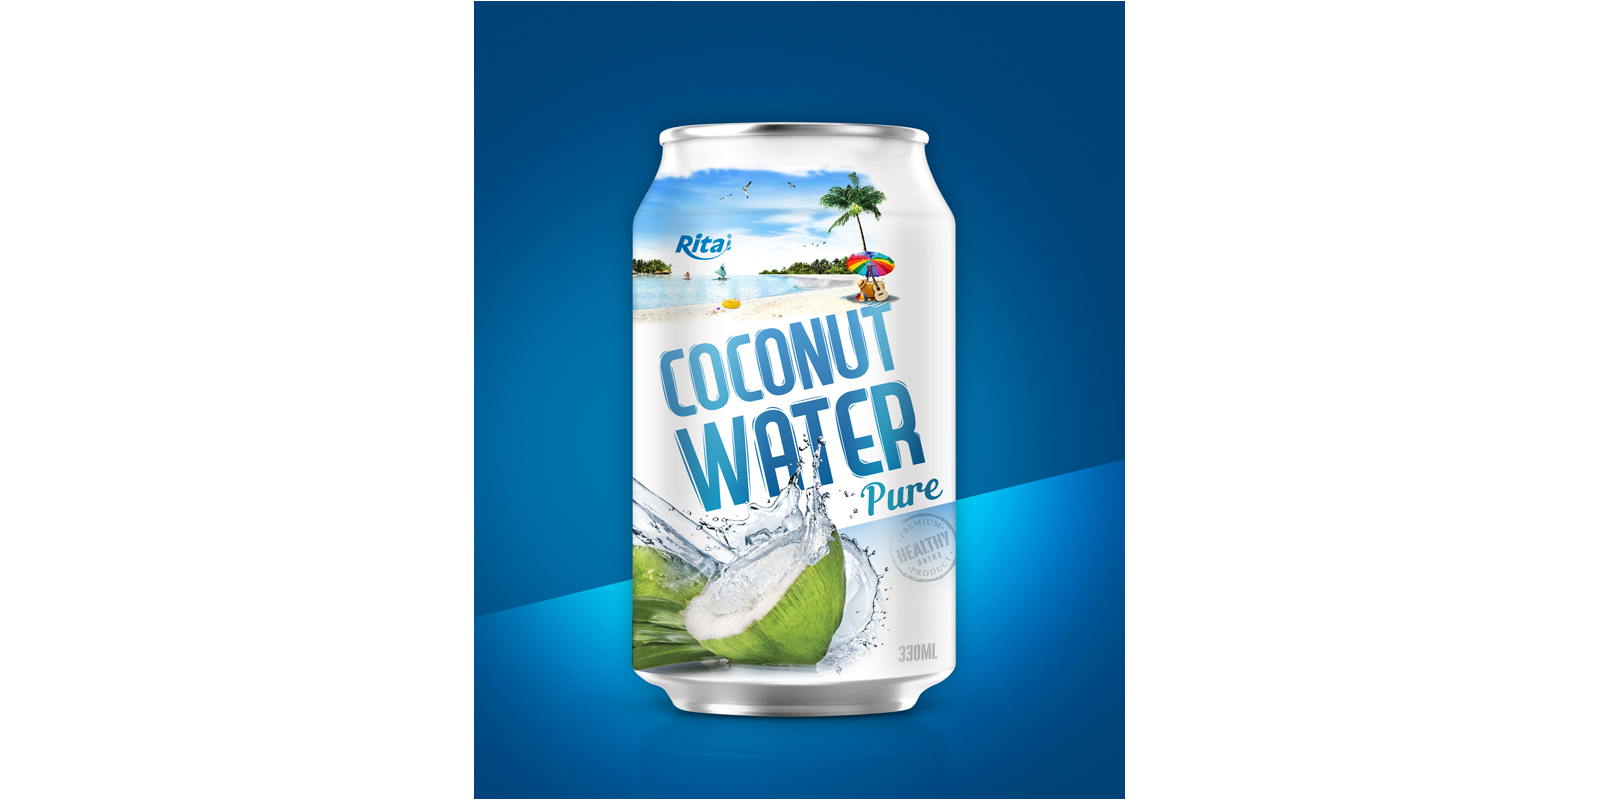 drink brand RITA coconut pure water